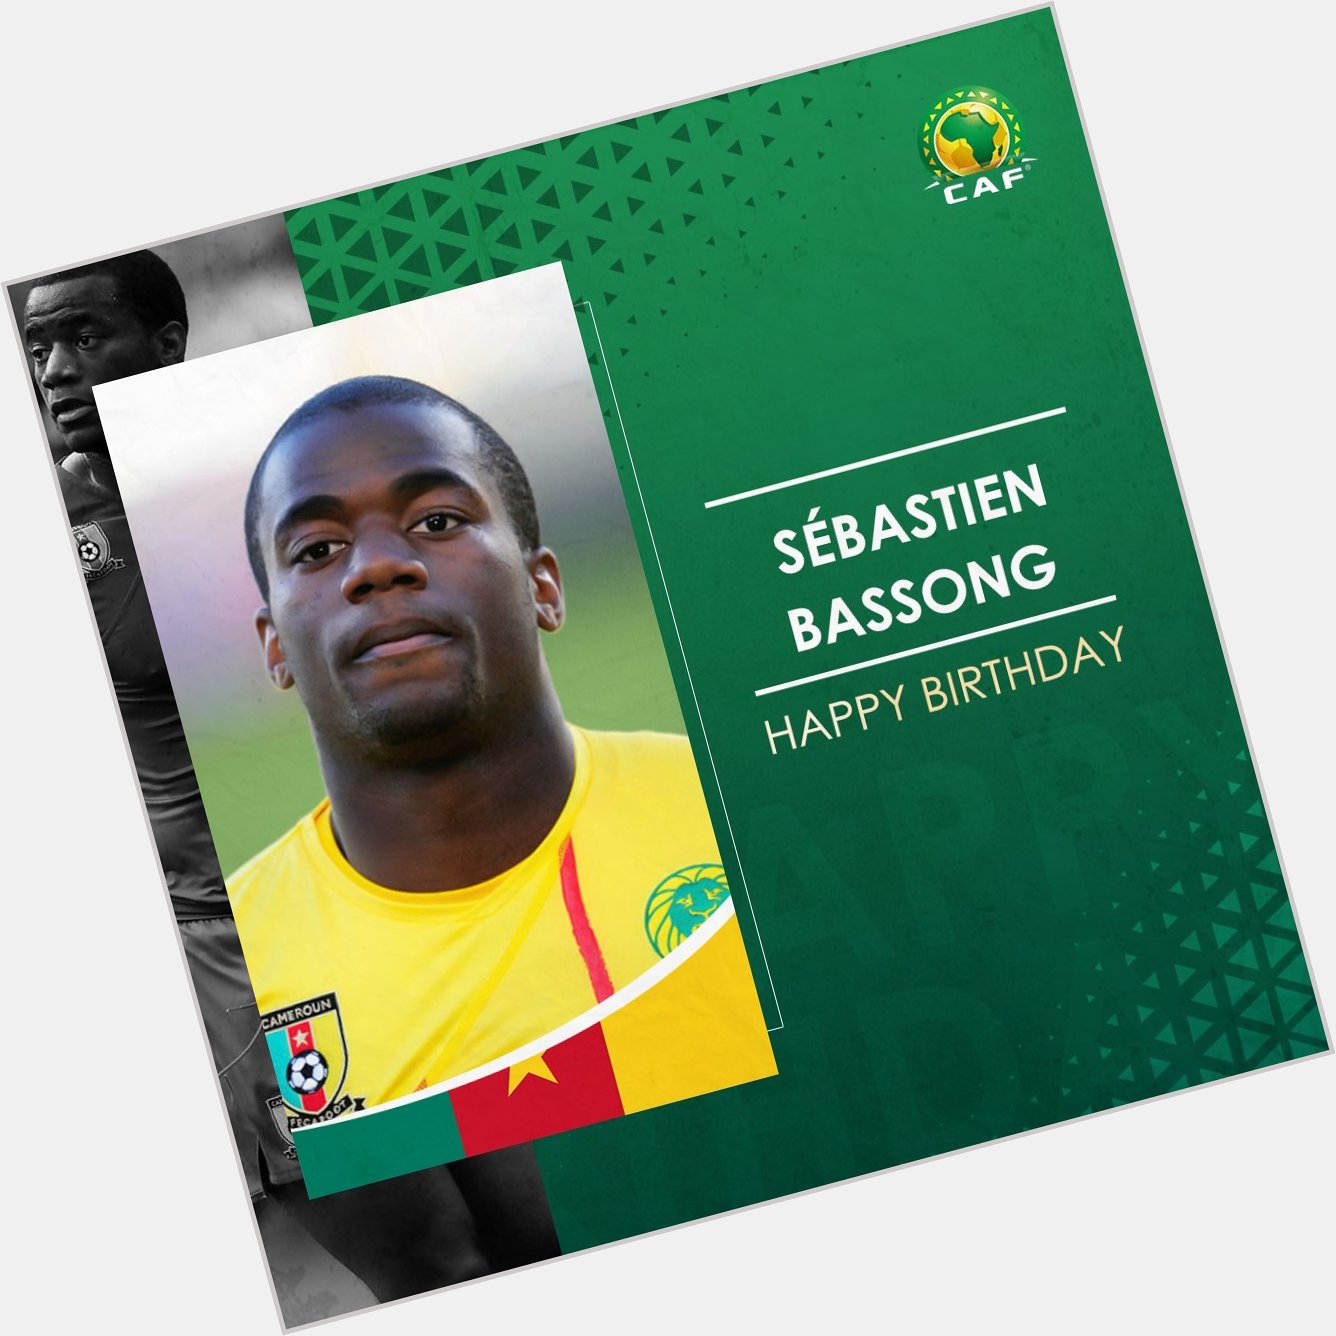   Happy Birthday to Cameroonian defender Sébastien Bassong! Best wishes! 